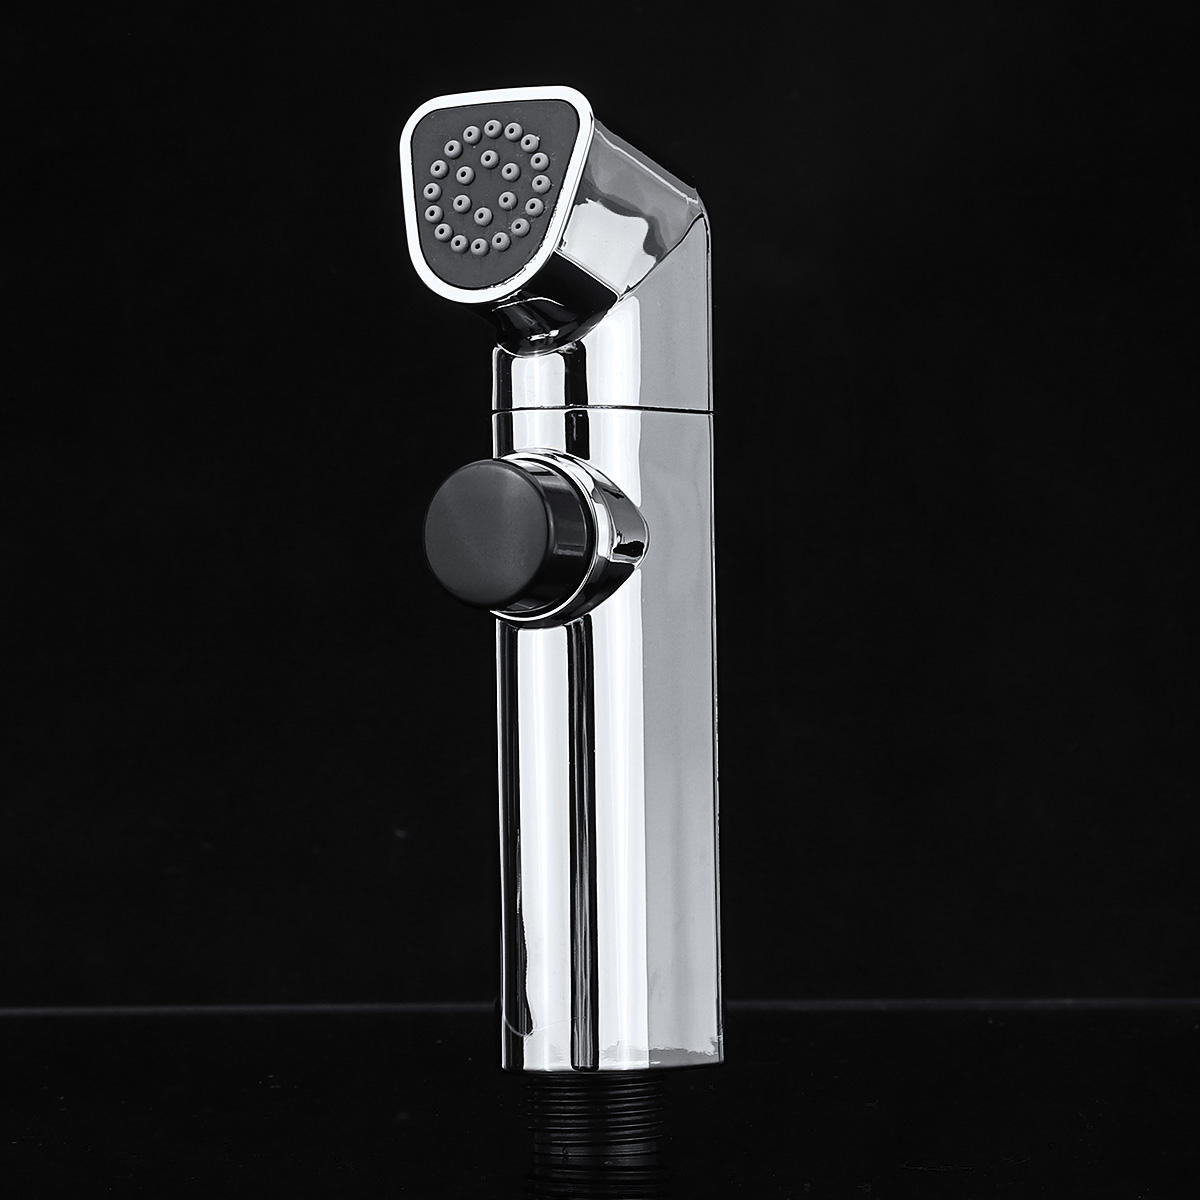 

ABS Handheld Bathroom Bidet Portable Toilet Bidet Spray Shower Head Water Nozzle Sprayer Cloth Diaper Sprayer w/ Press S